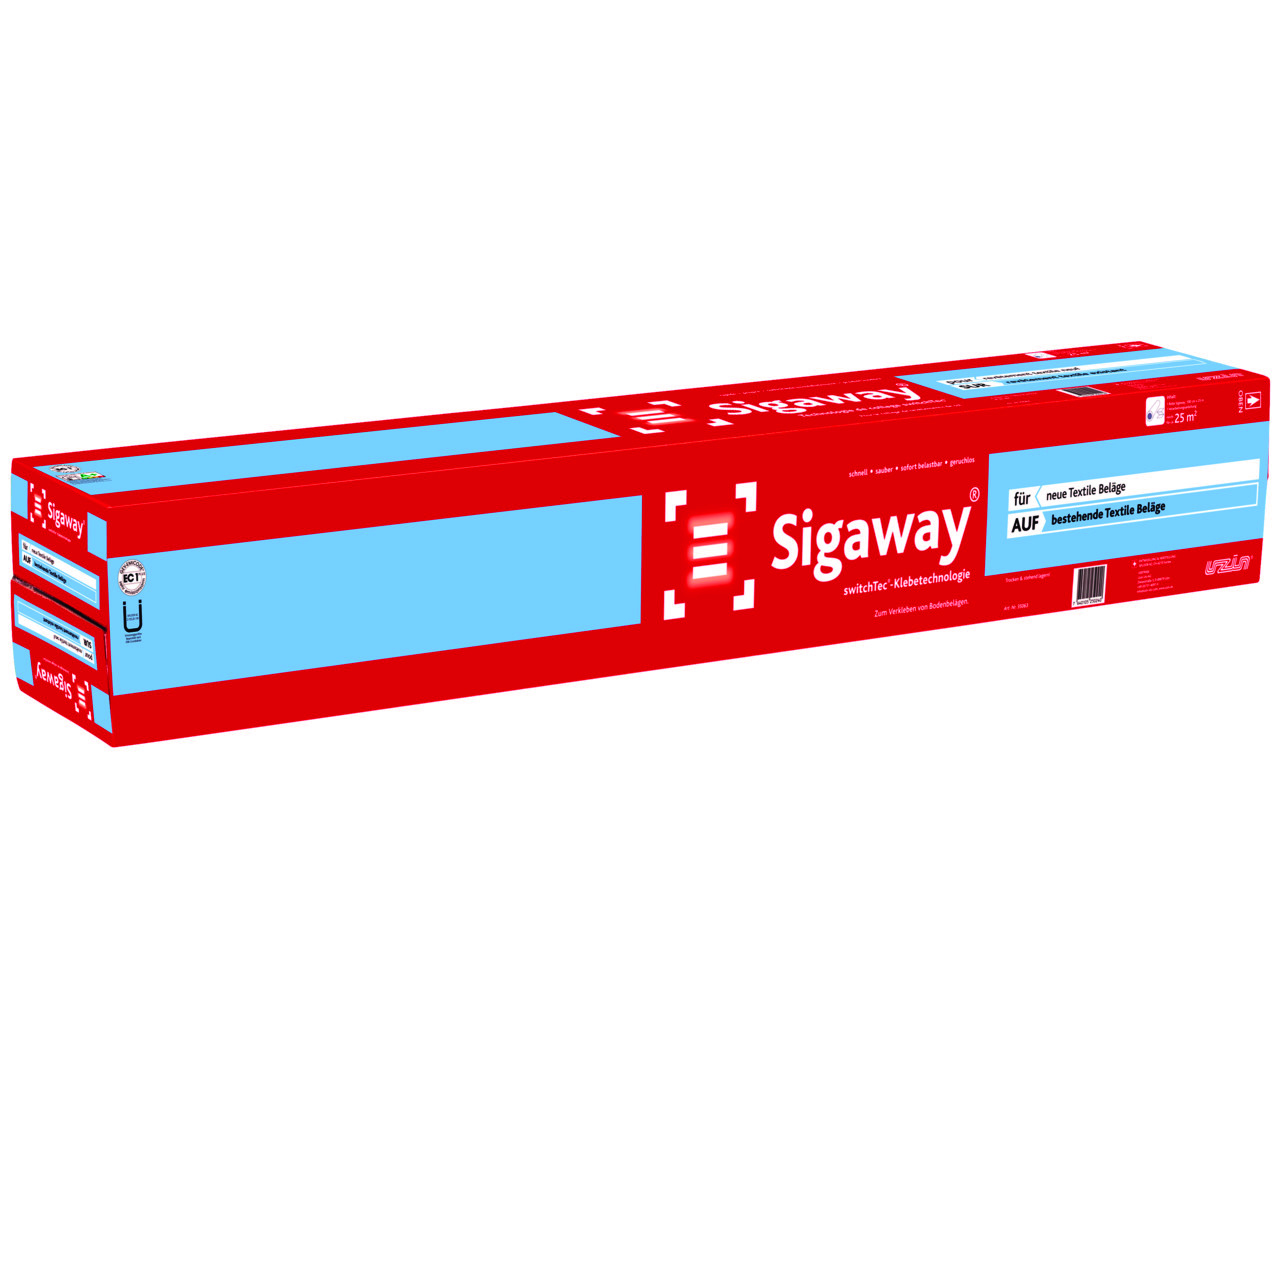 Sigaway-carton